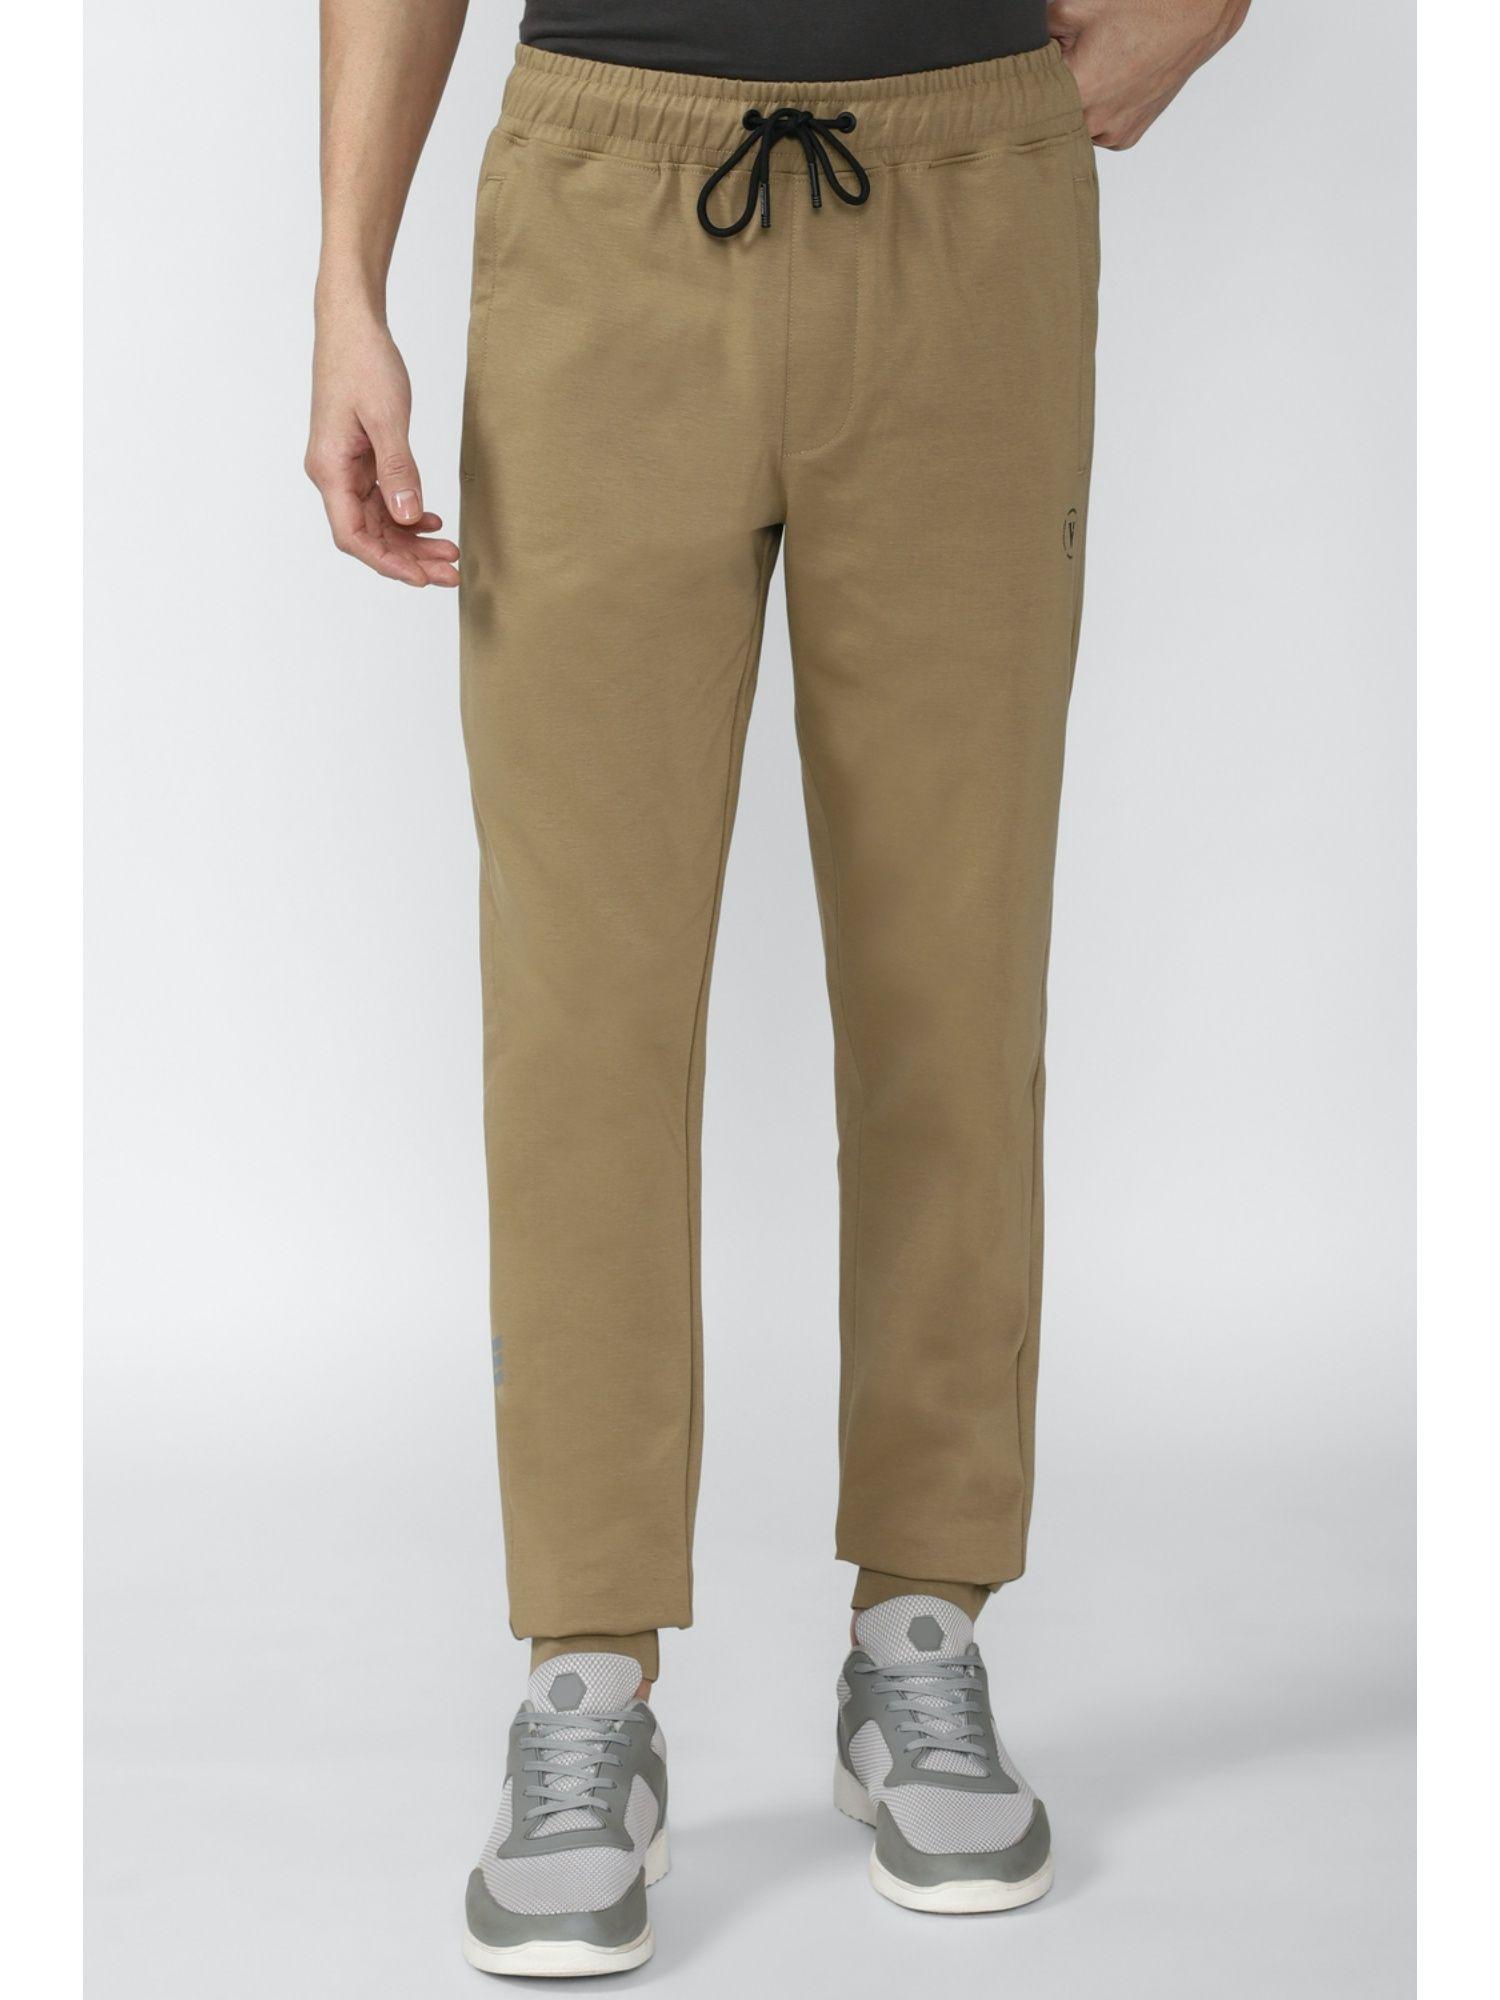 brown jogger pants